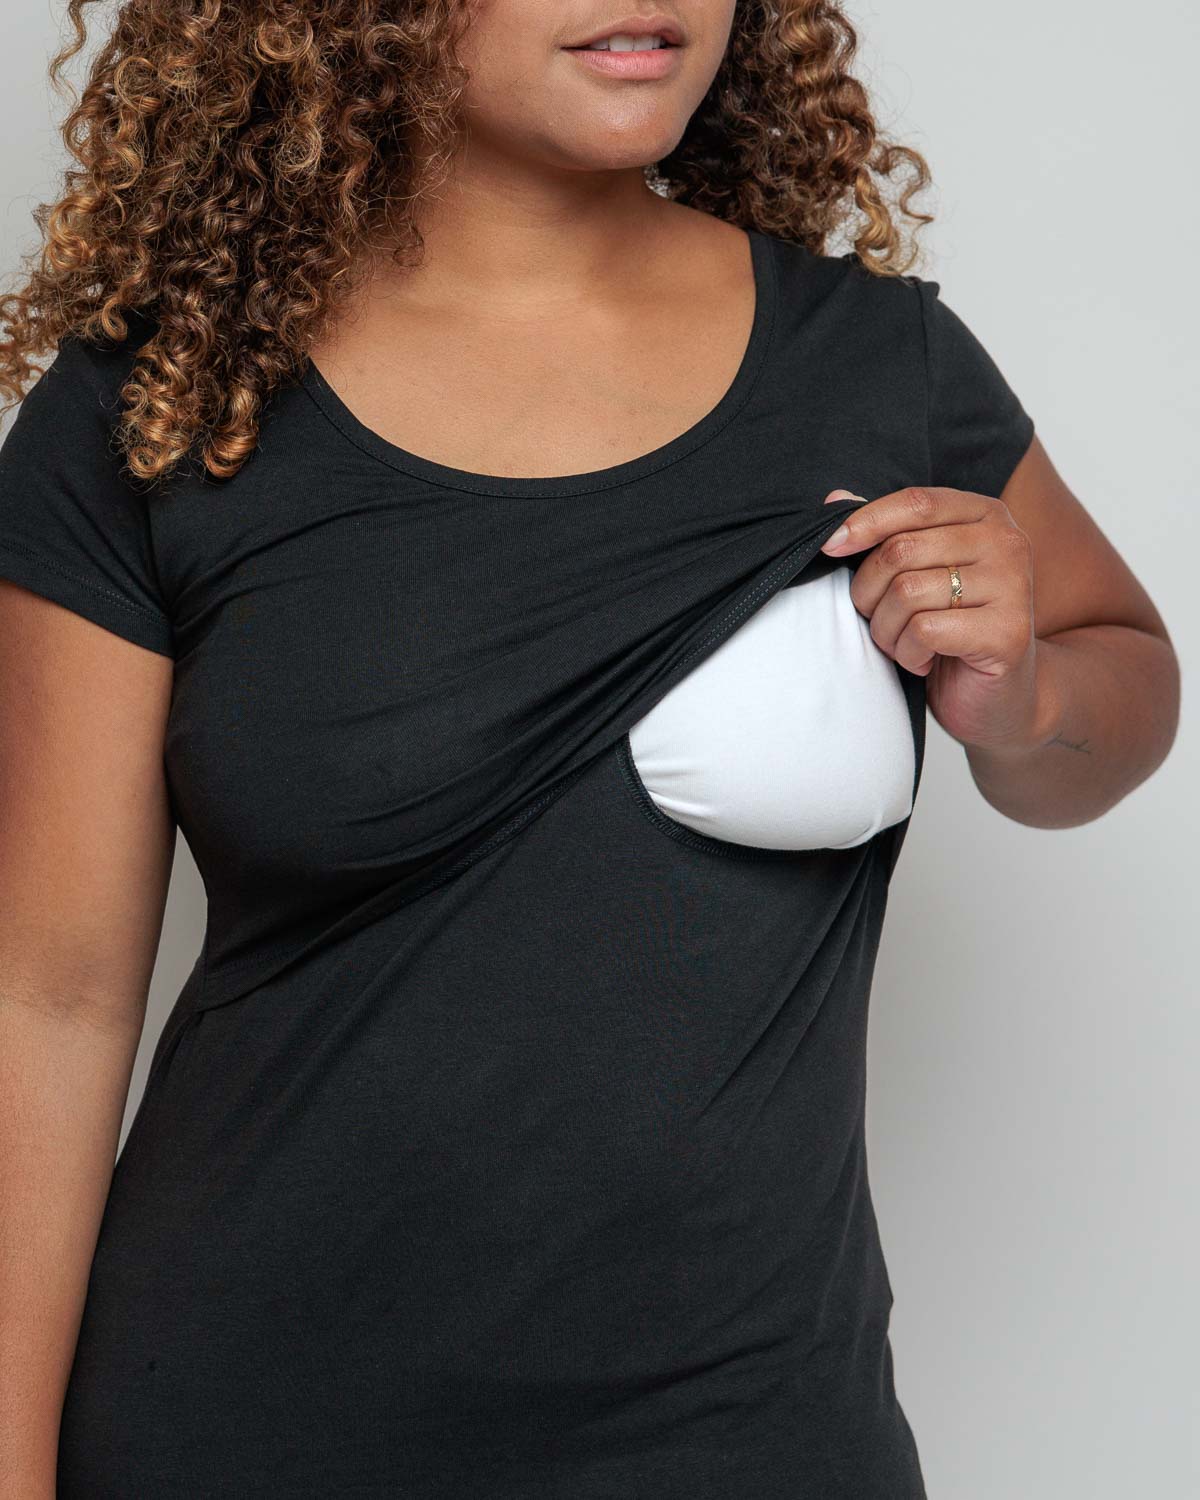 Nursing T-shirt in Black for breastfeeding